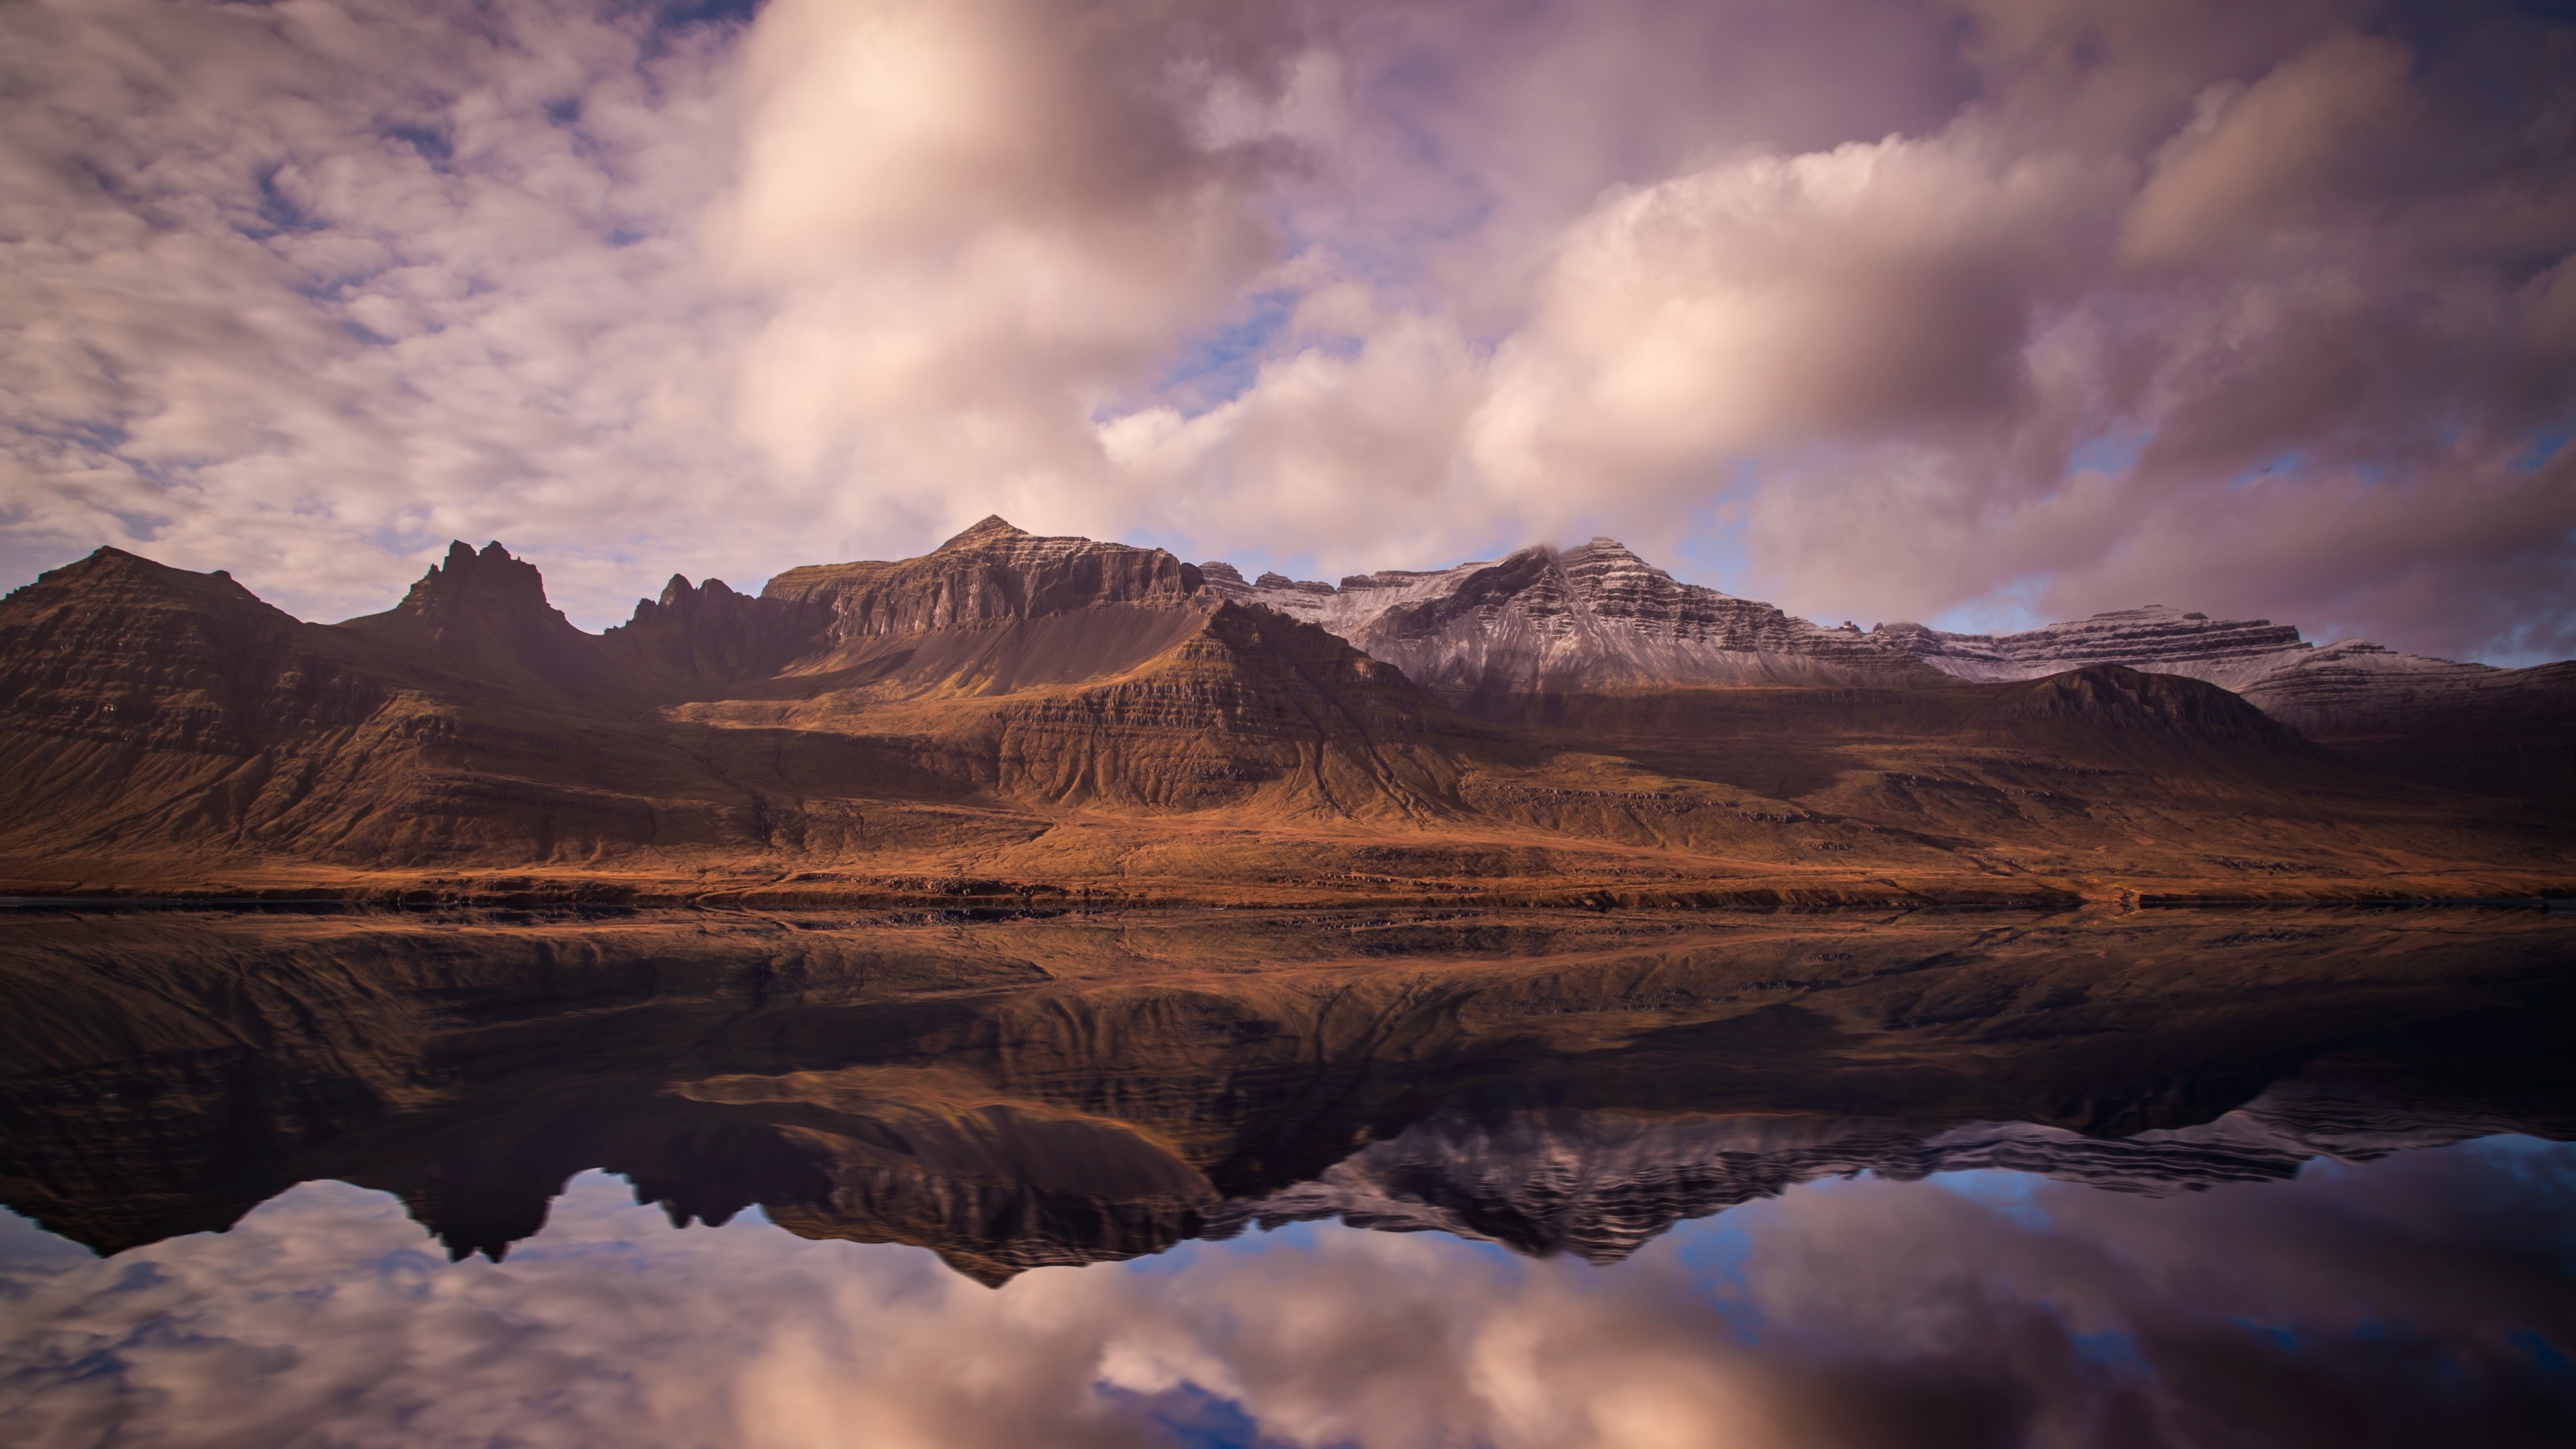 Iceland Mountains, River and Clouds, 4K Wallpaper, Scenic Wonder, 3840x2160 4K Desktop